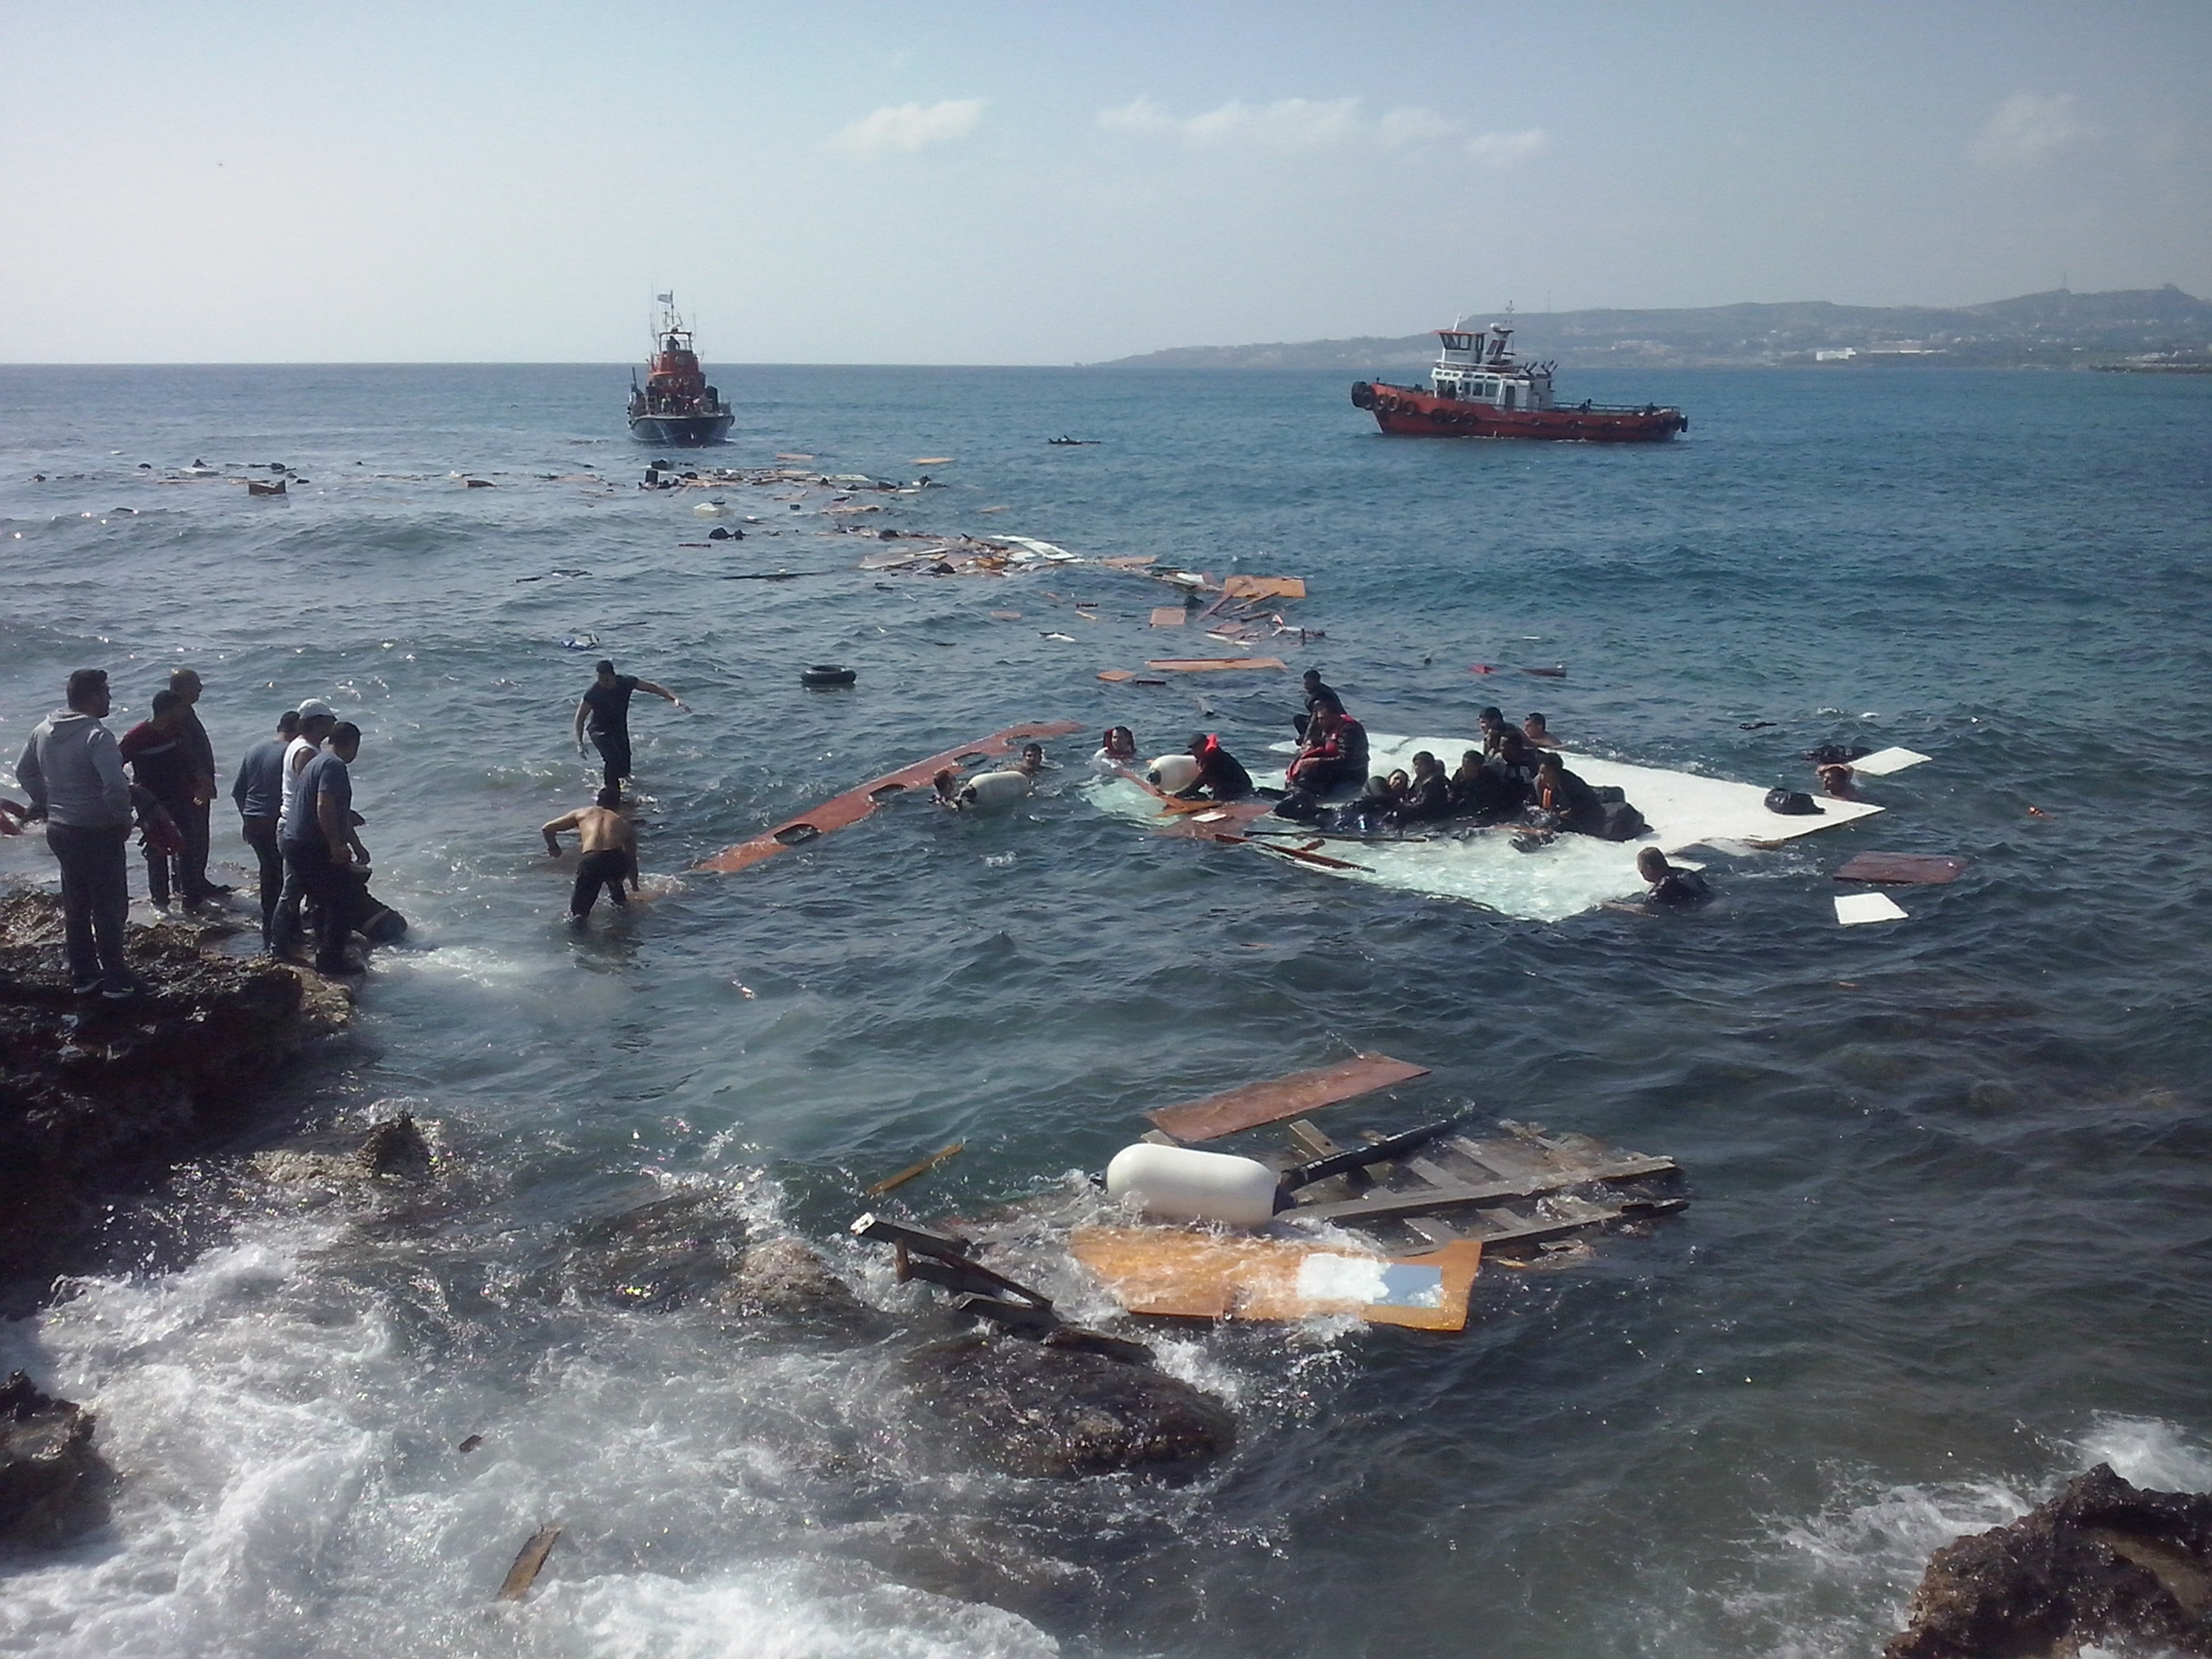 Гибнущее море. Судно с беженцами затонуло Средиземное море. Мигранты утонули в Средиземном море. Средиземное море беженцы.